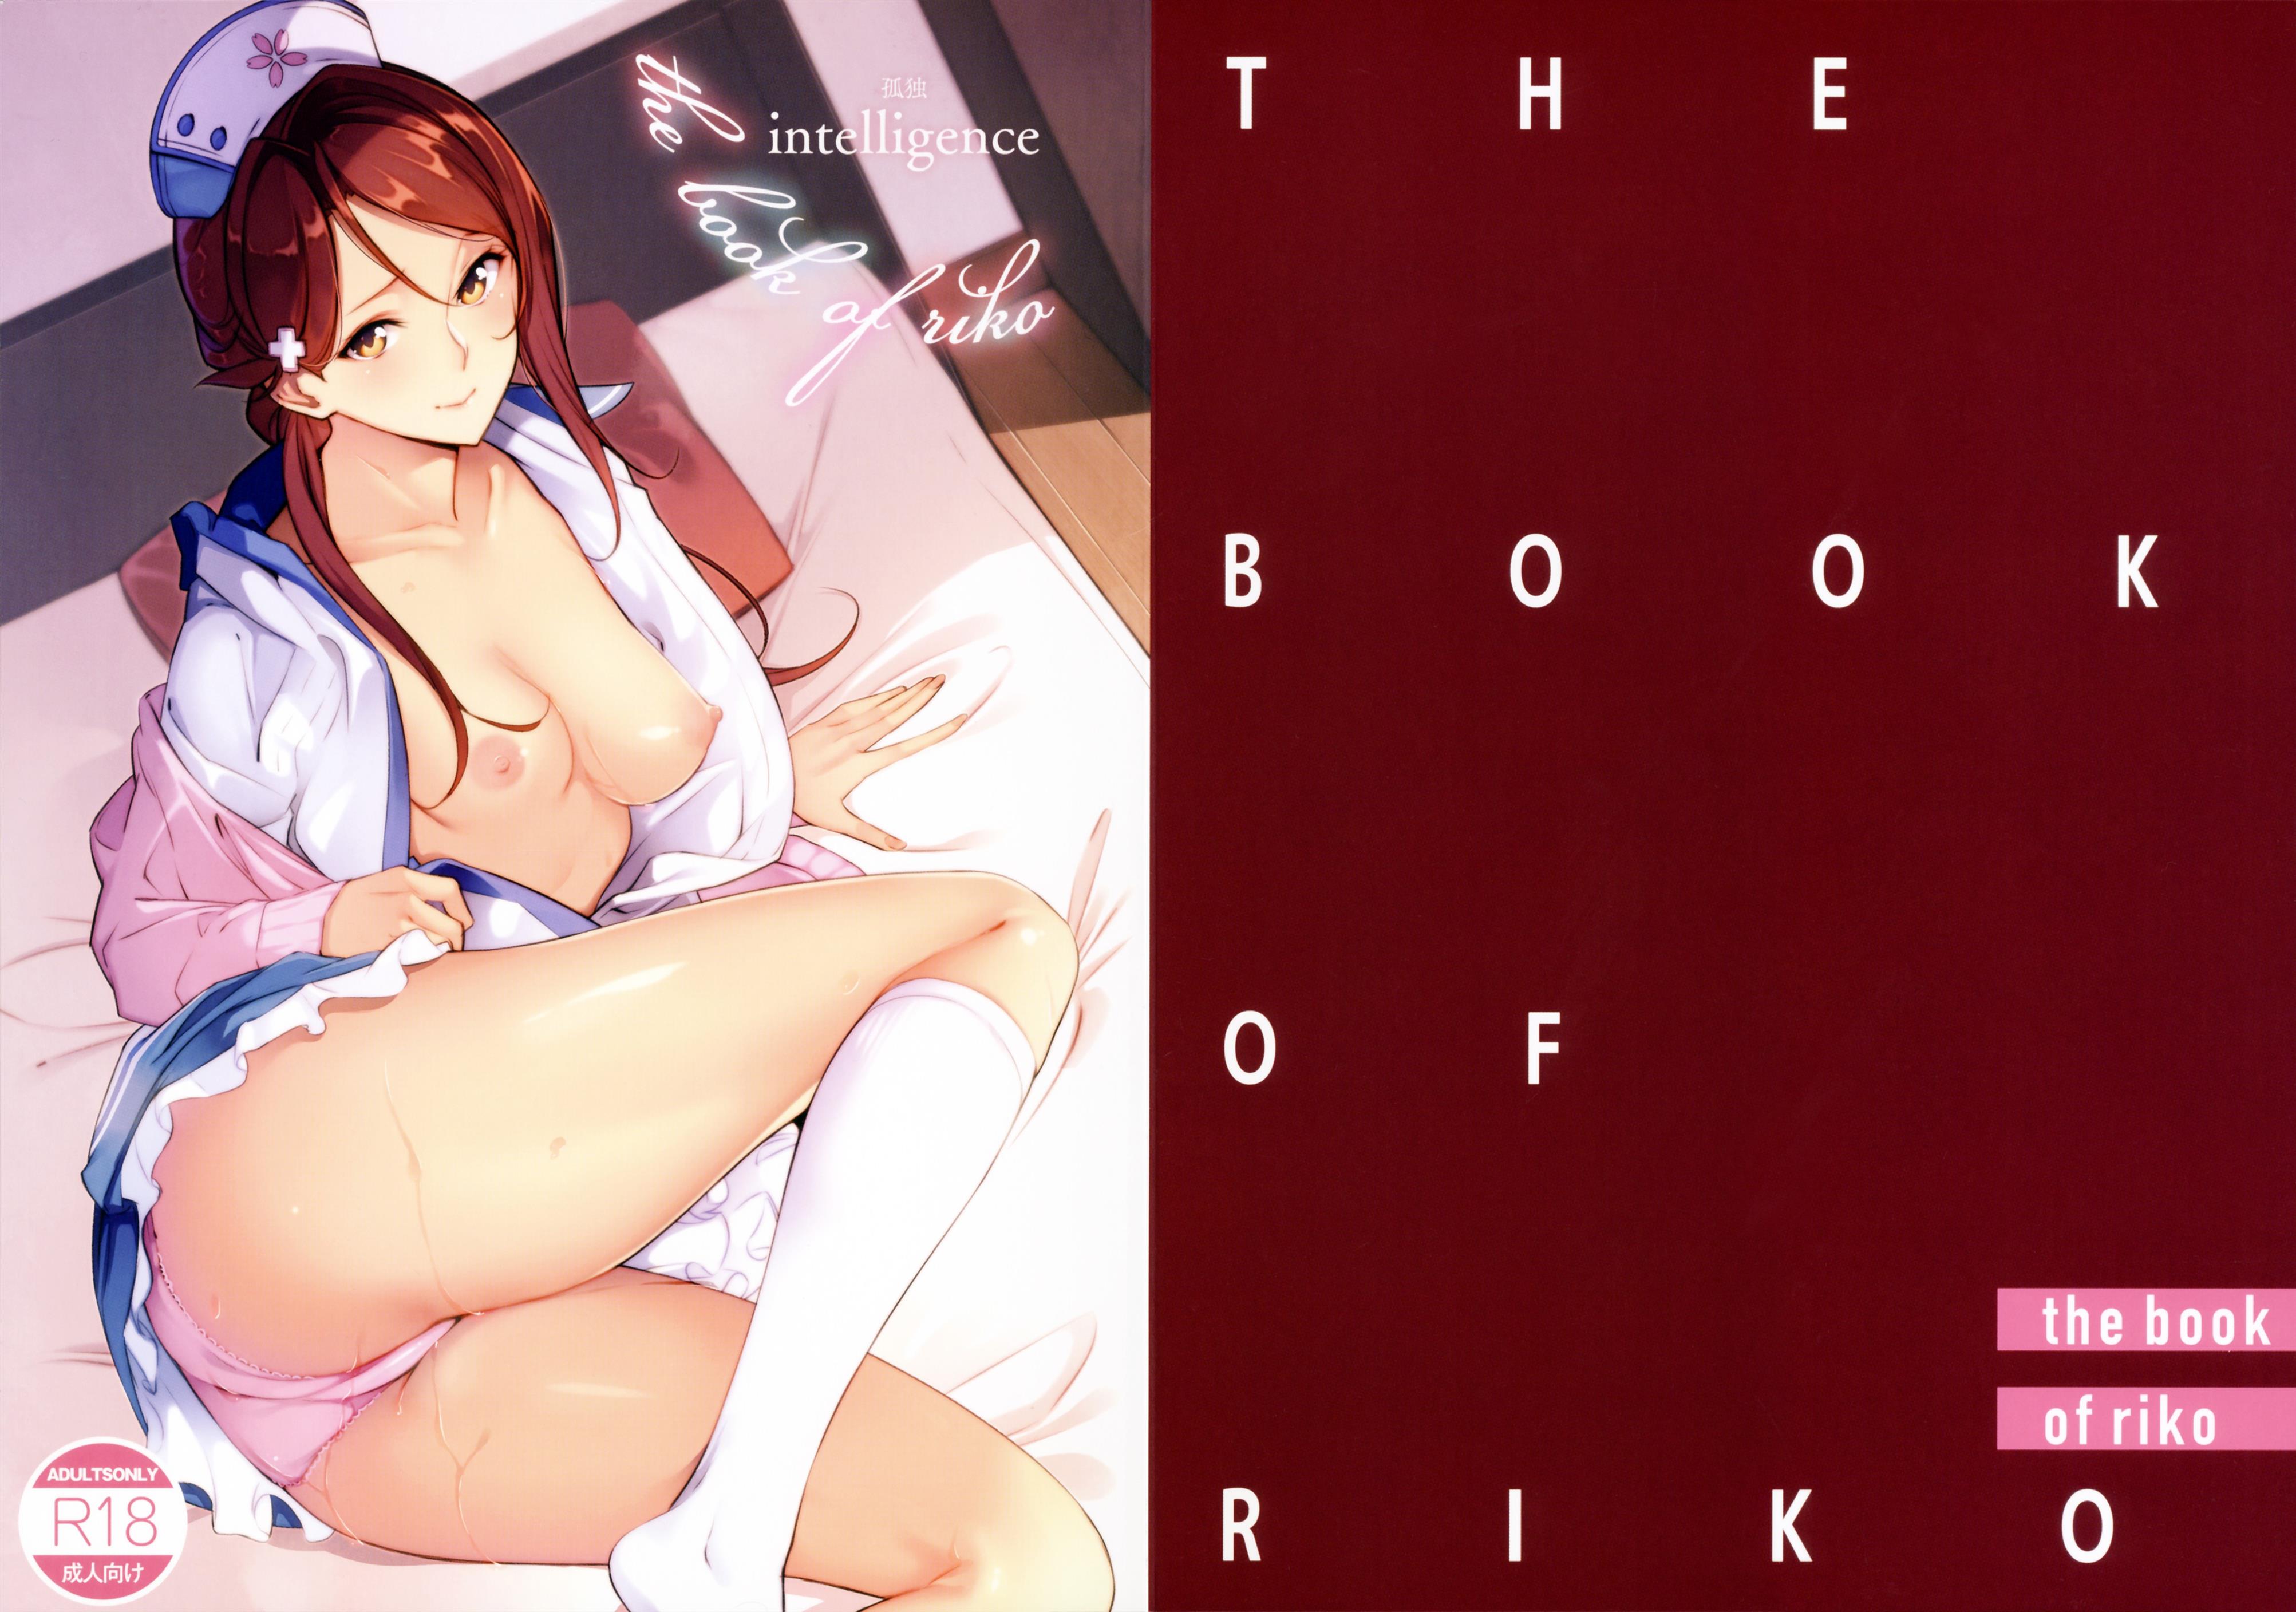 THE BOOK OF RIKO